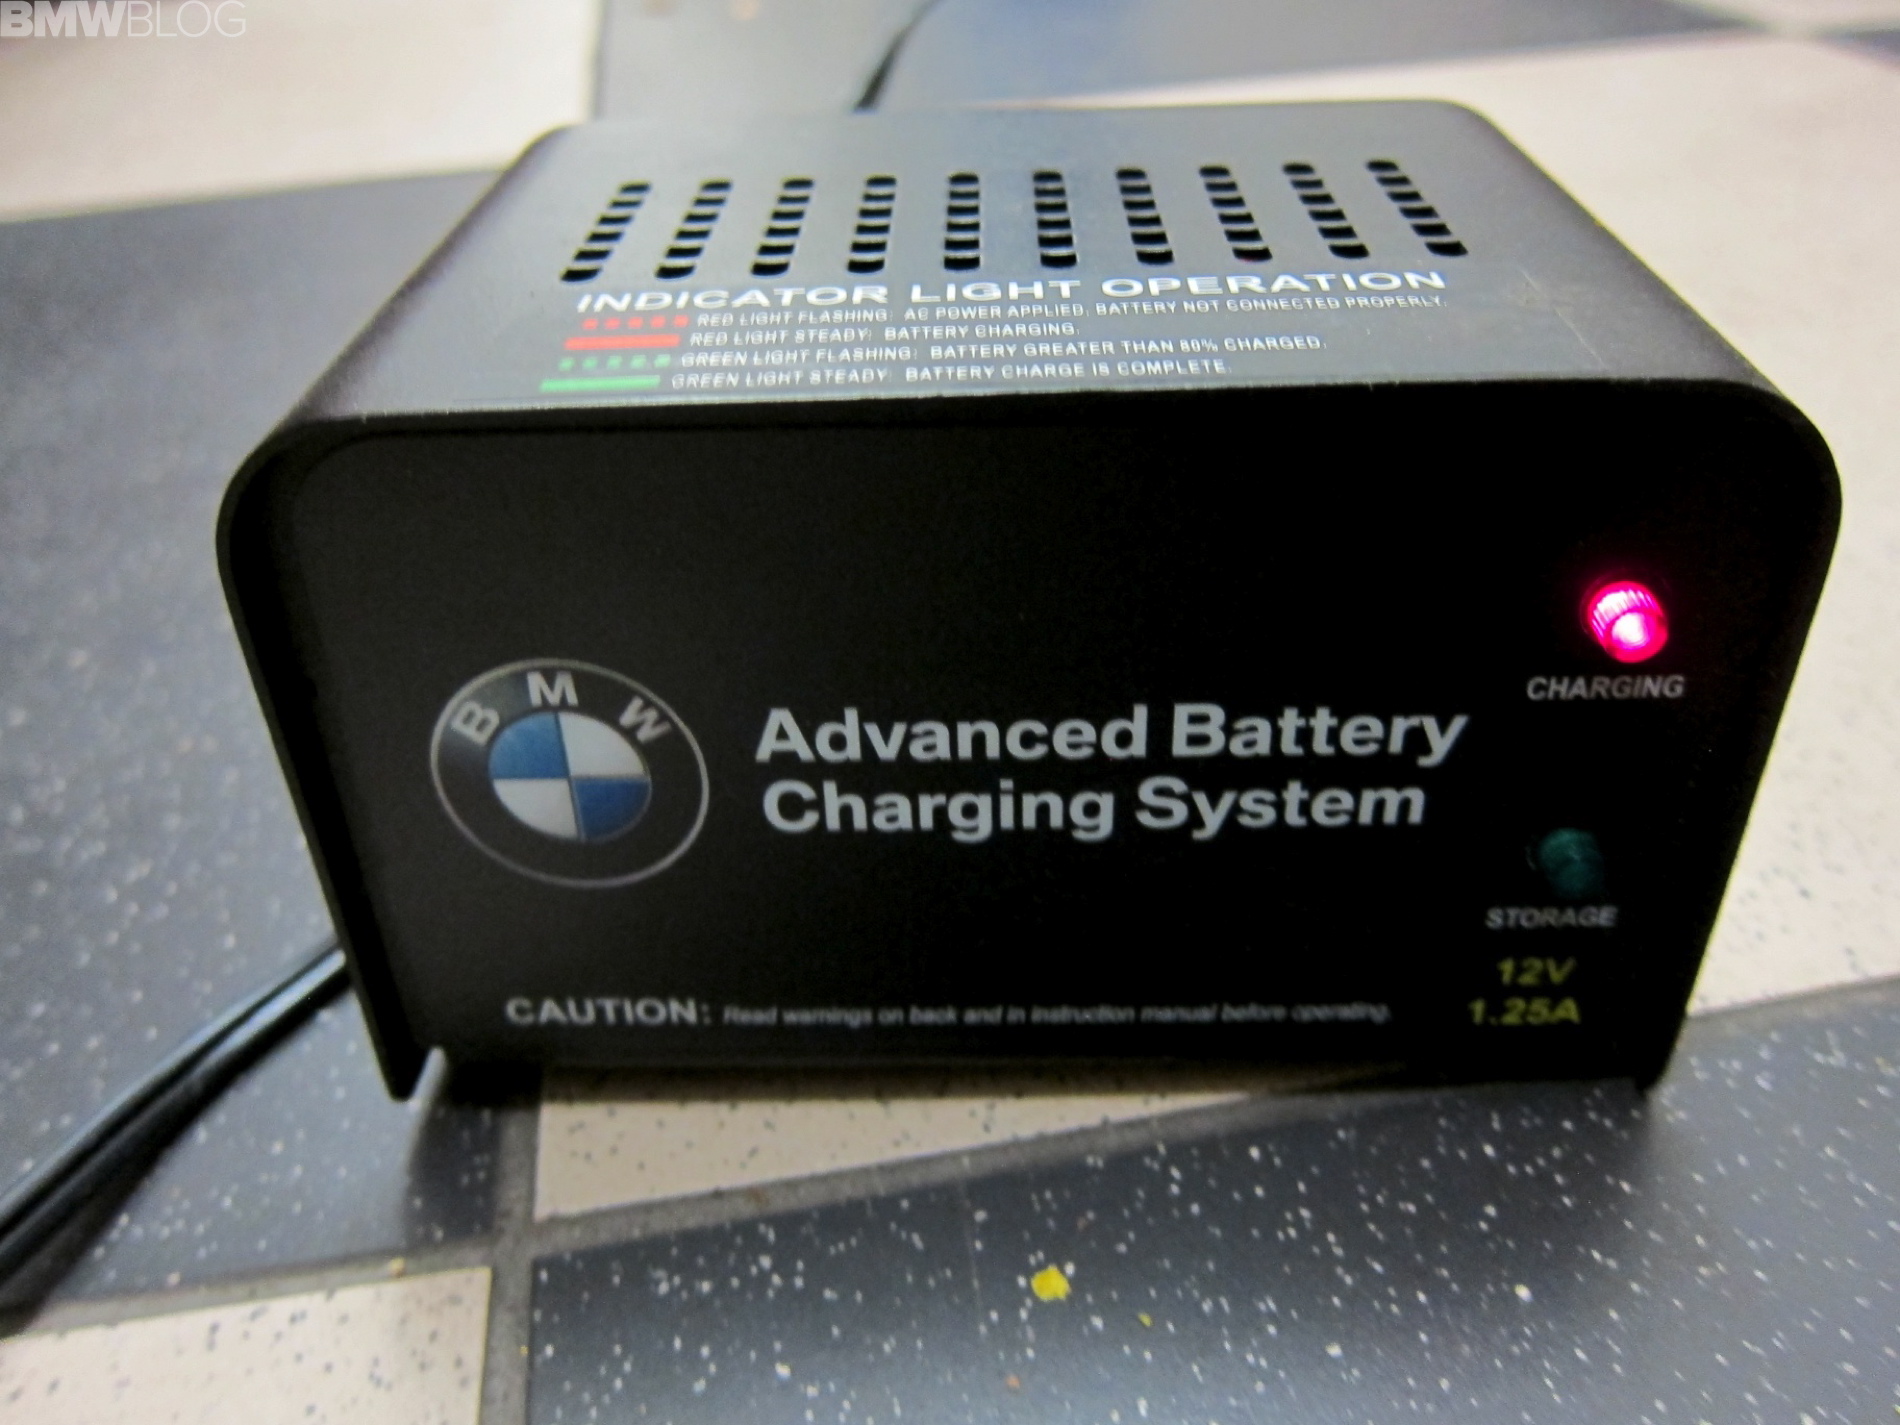 Bmw advanced charging system manual #1